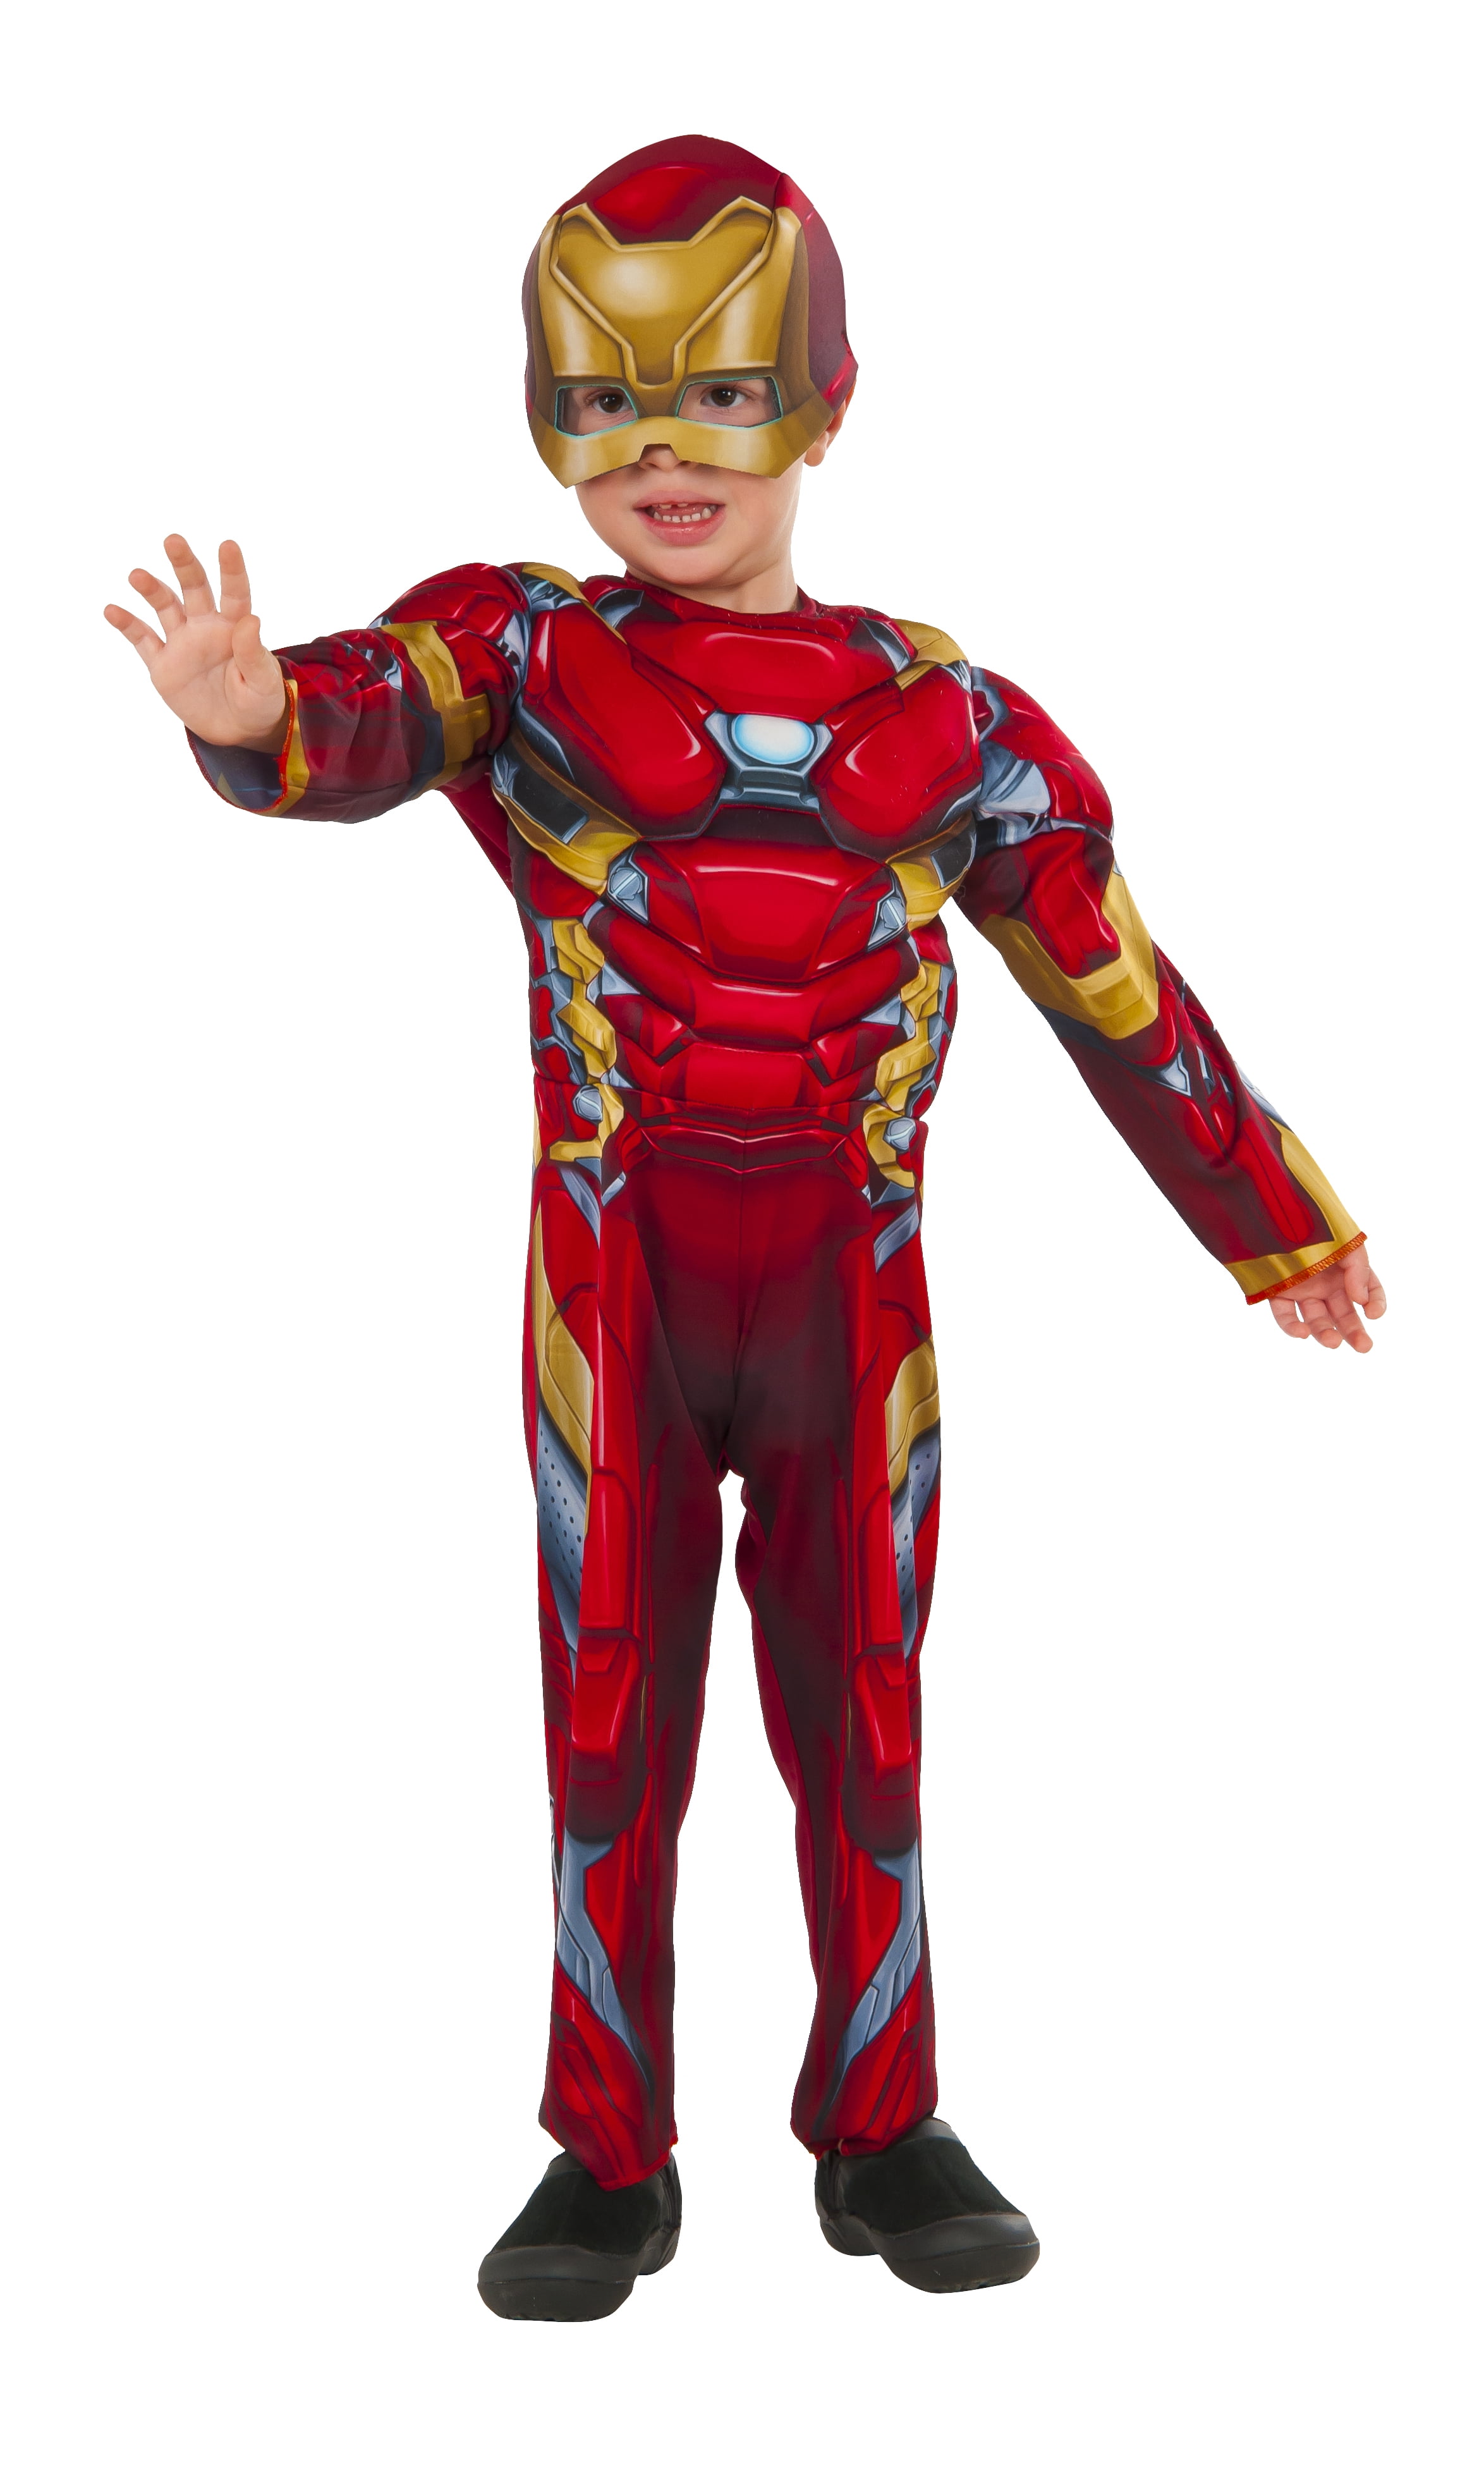 Rubies Iron Man Toddler Halloween Costume